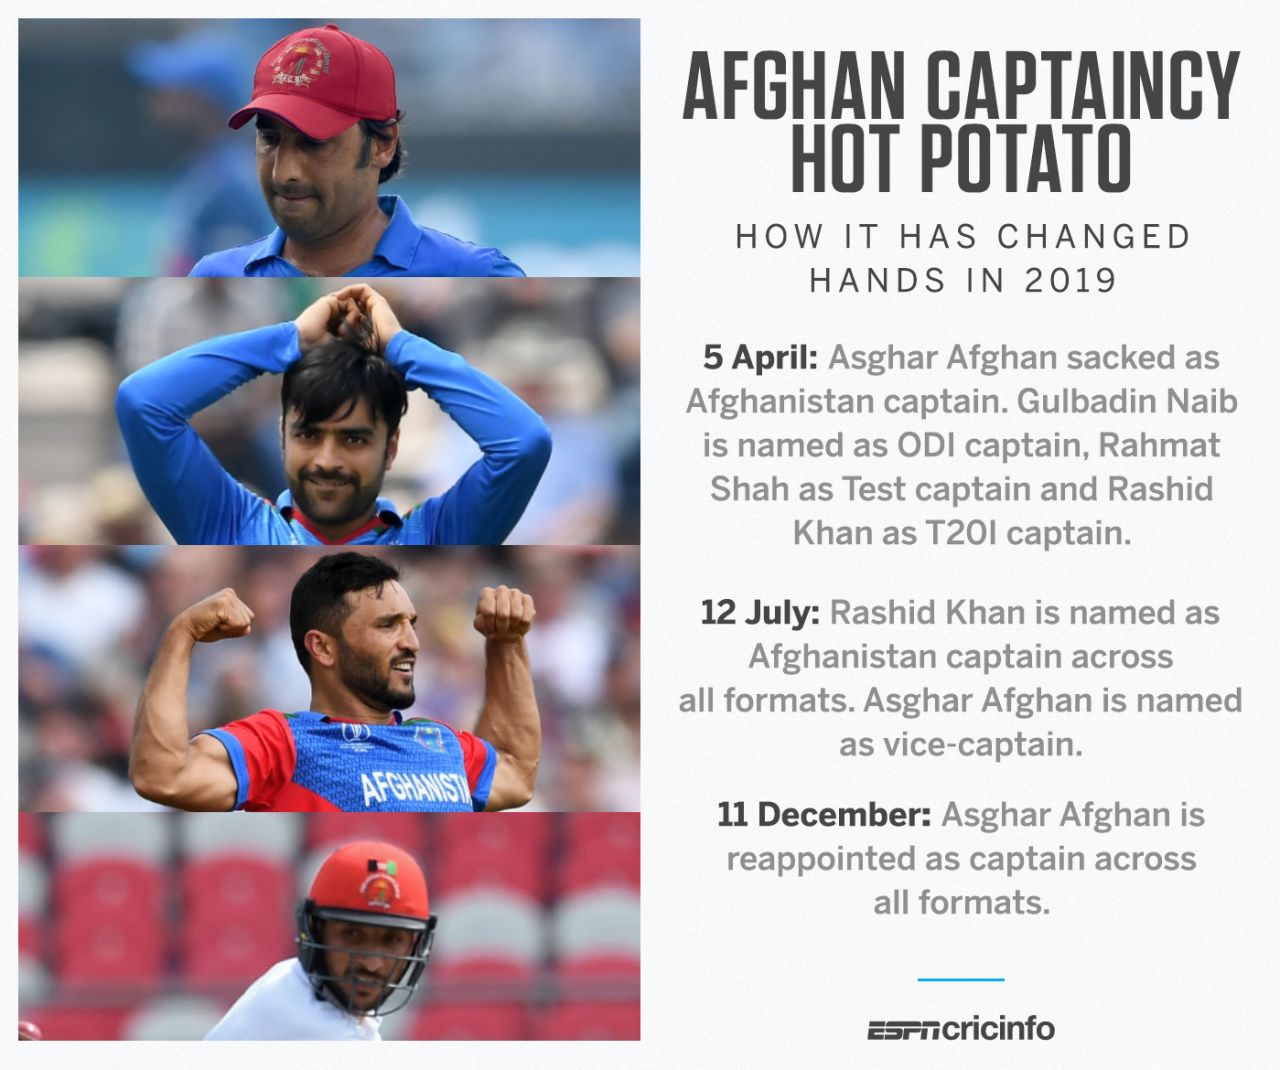 The Afghanistan captaincy hot potato